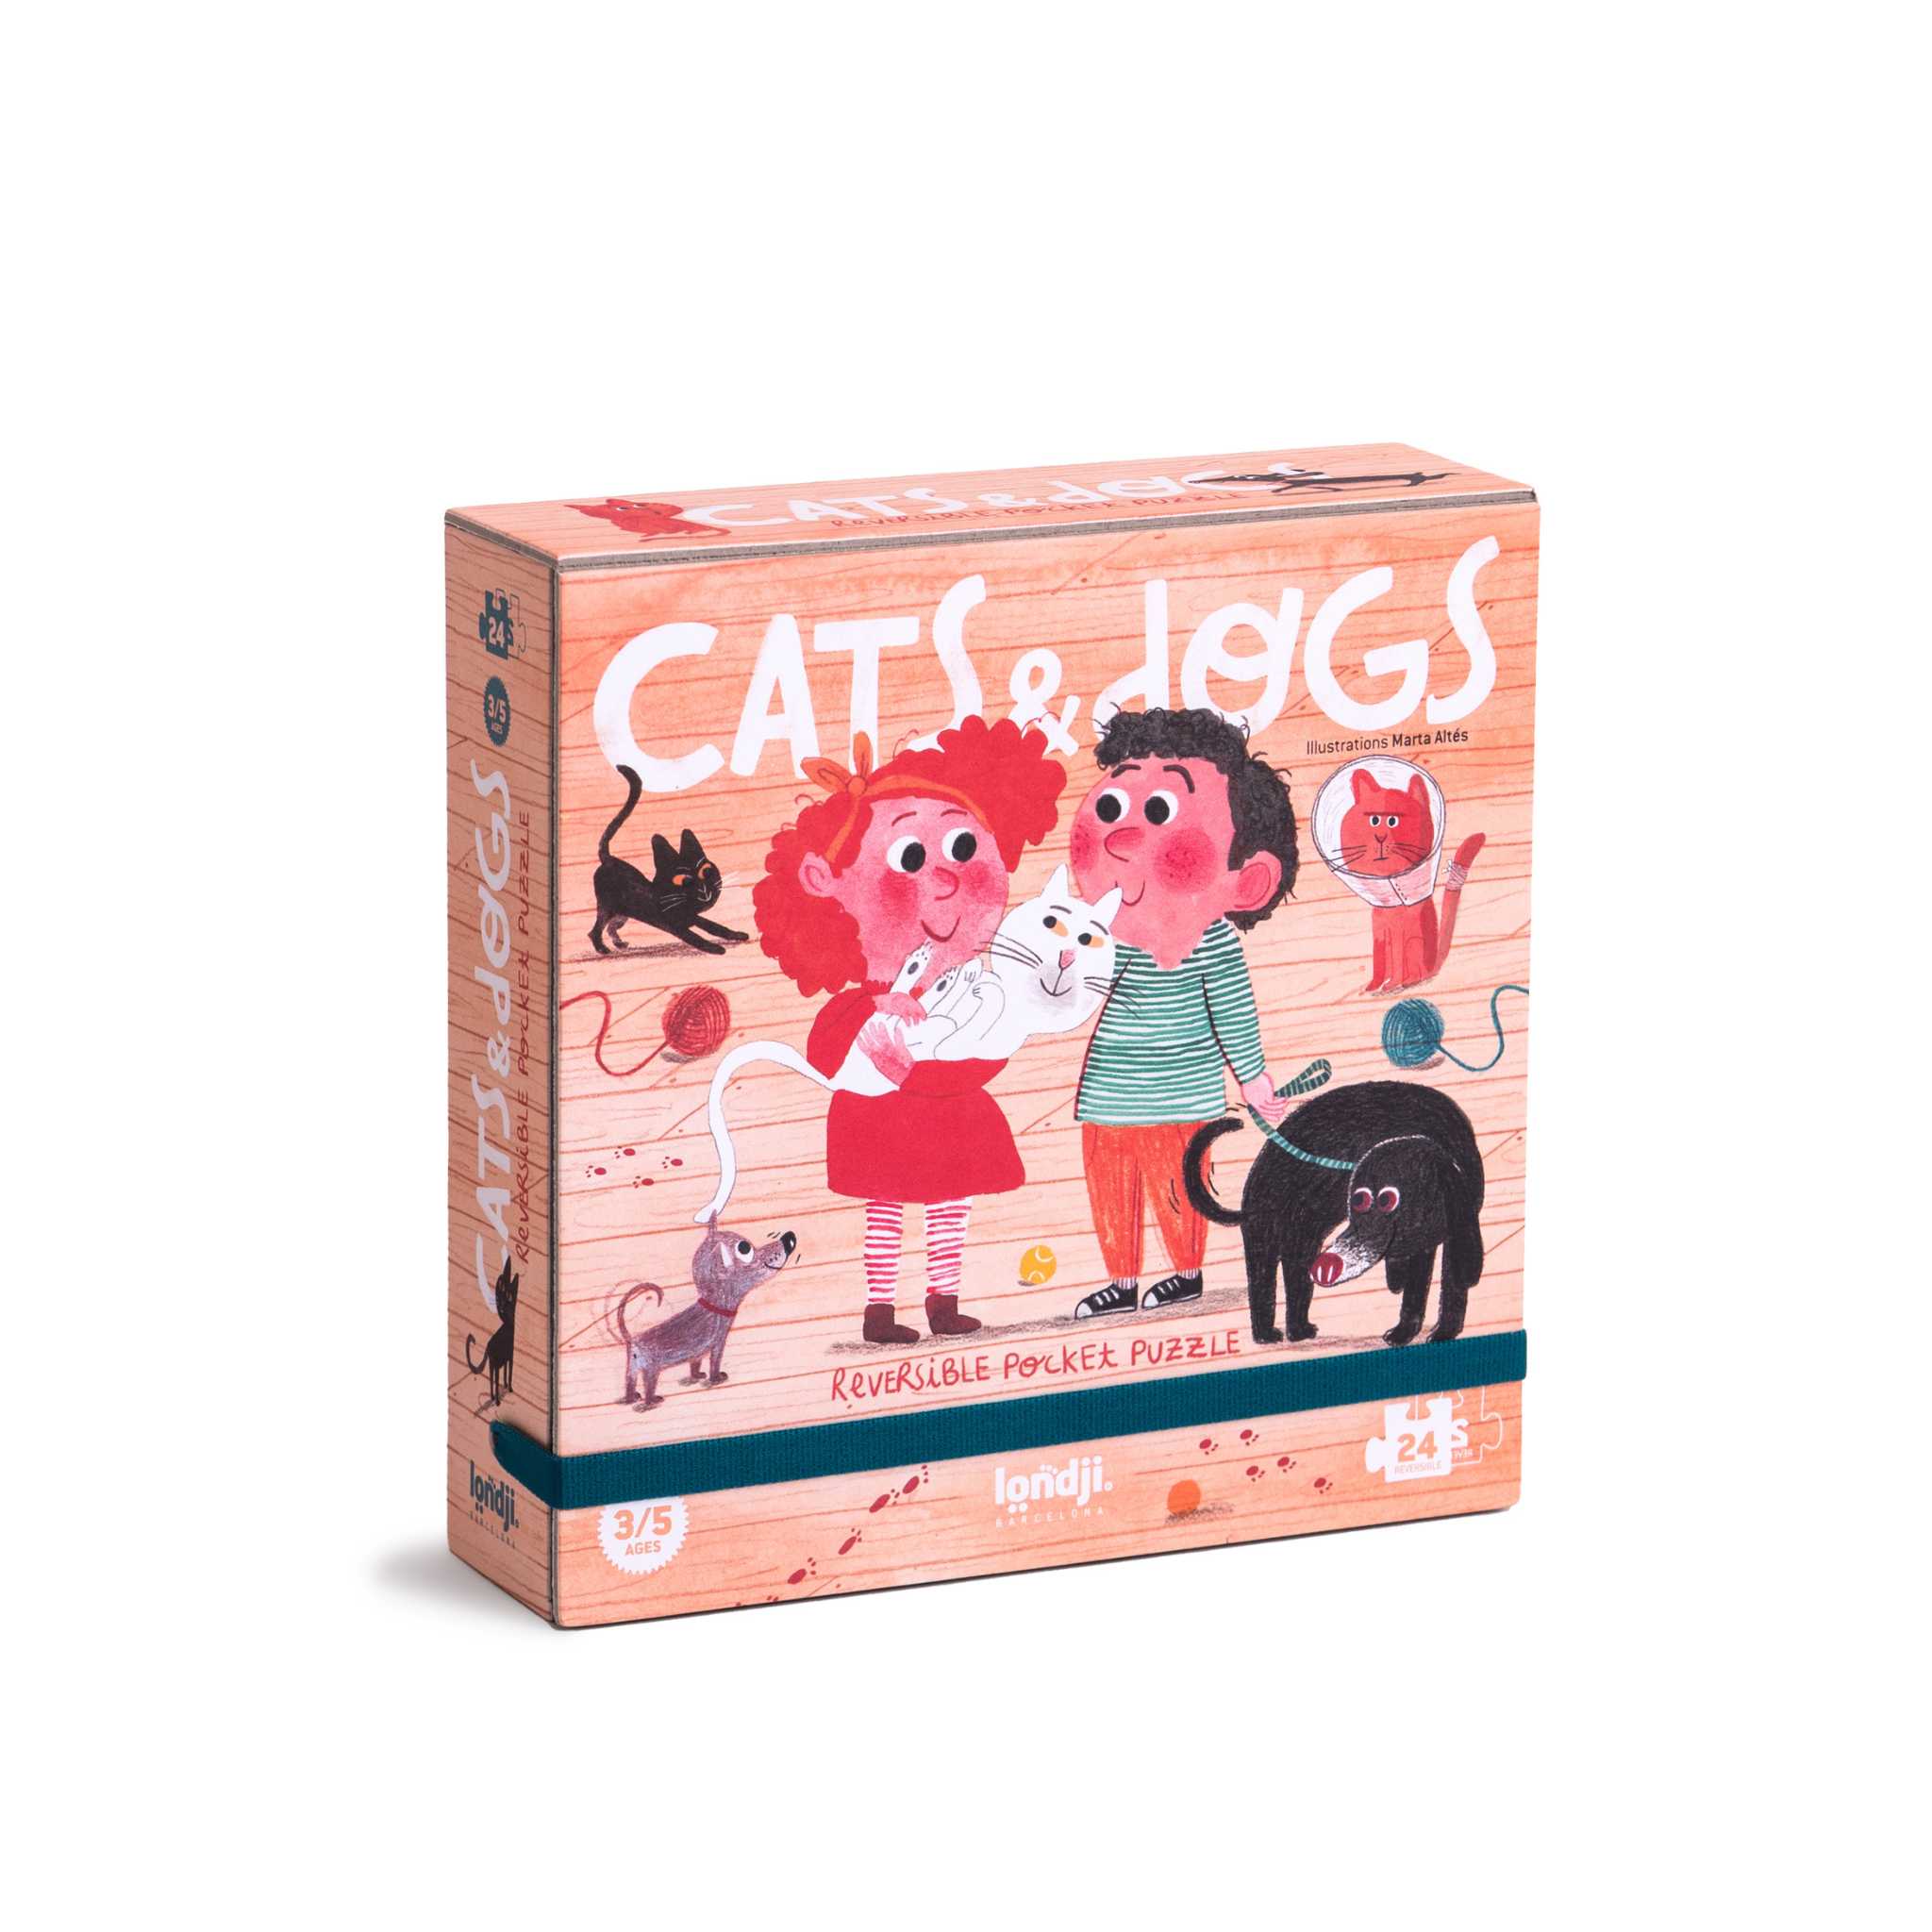 Londji Cats & Dogs Pocket Puzzle Age 3 Plus - Main Image